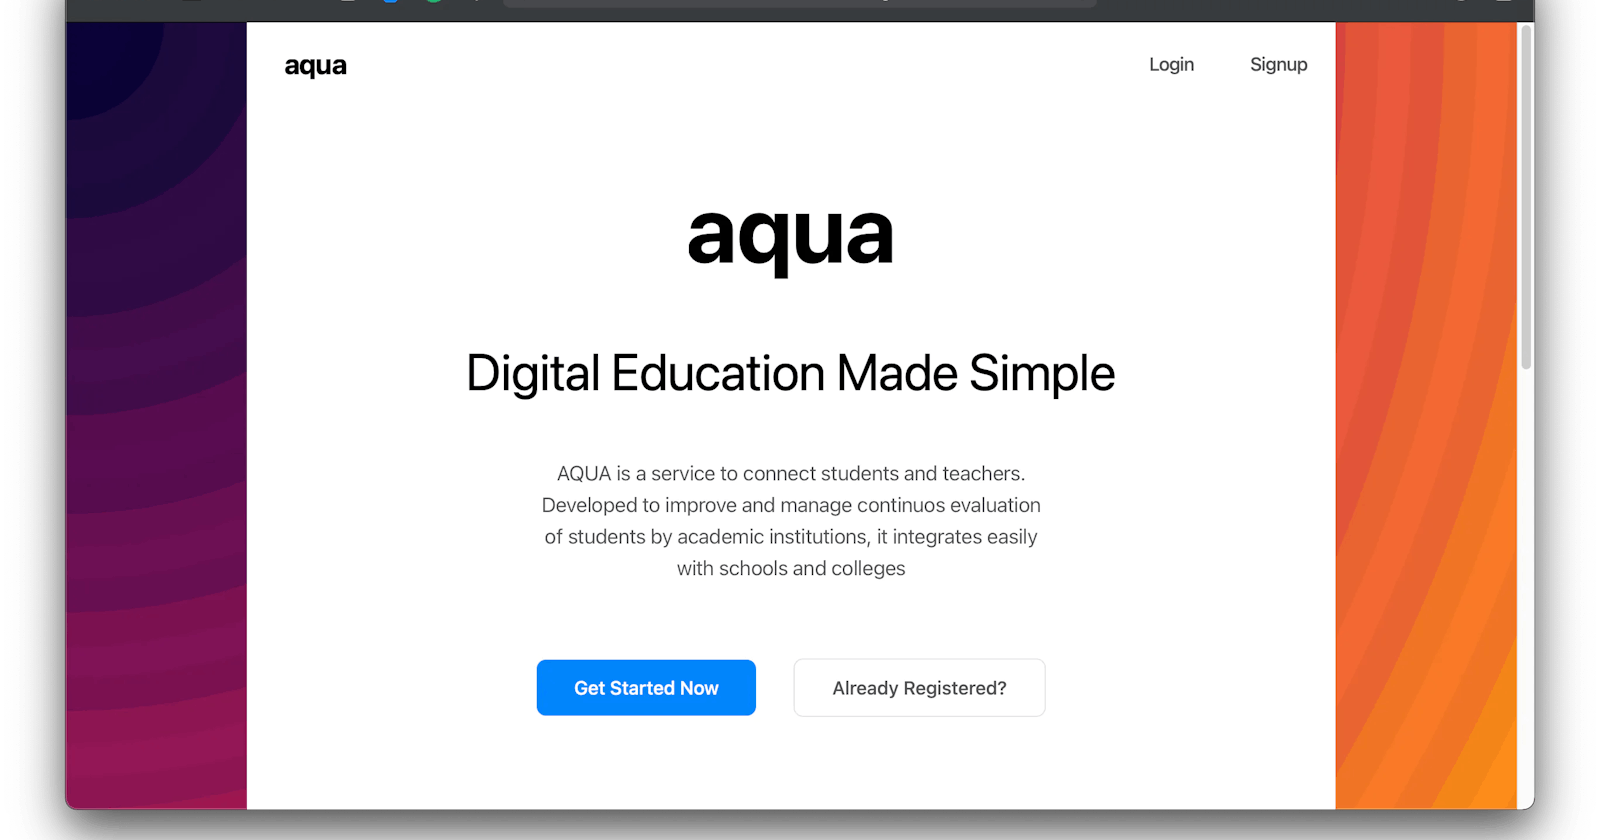 Introducing AQUA: Digital Education Made Simple